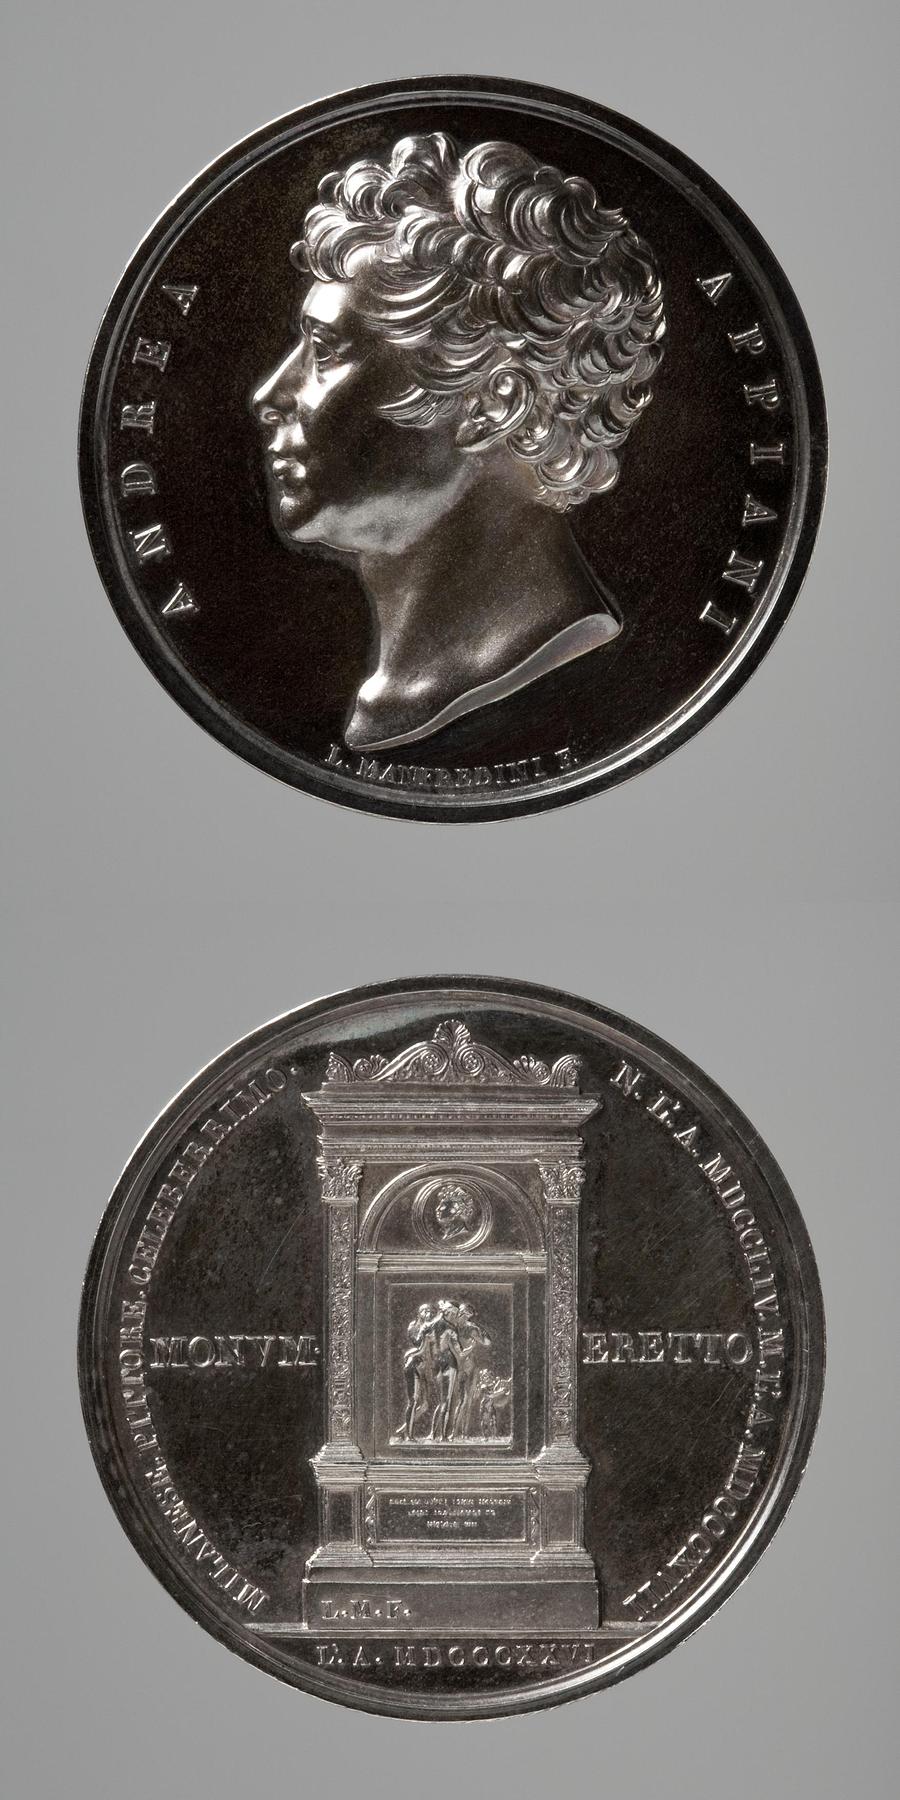 Medaljens forside: Andrea Appiani. Medaljens bagside: Monument over Andrea Appiani, F16